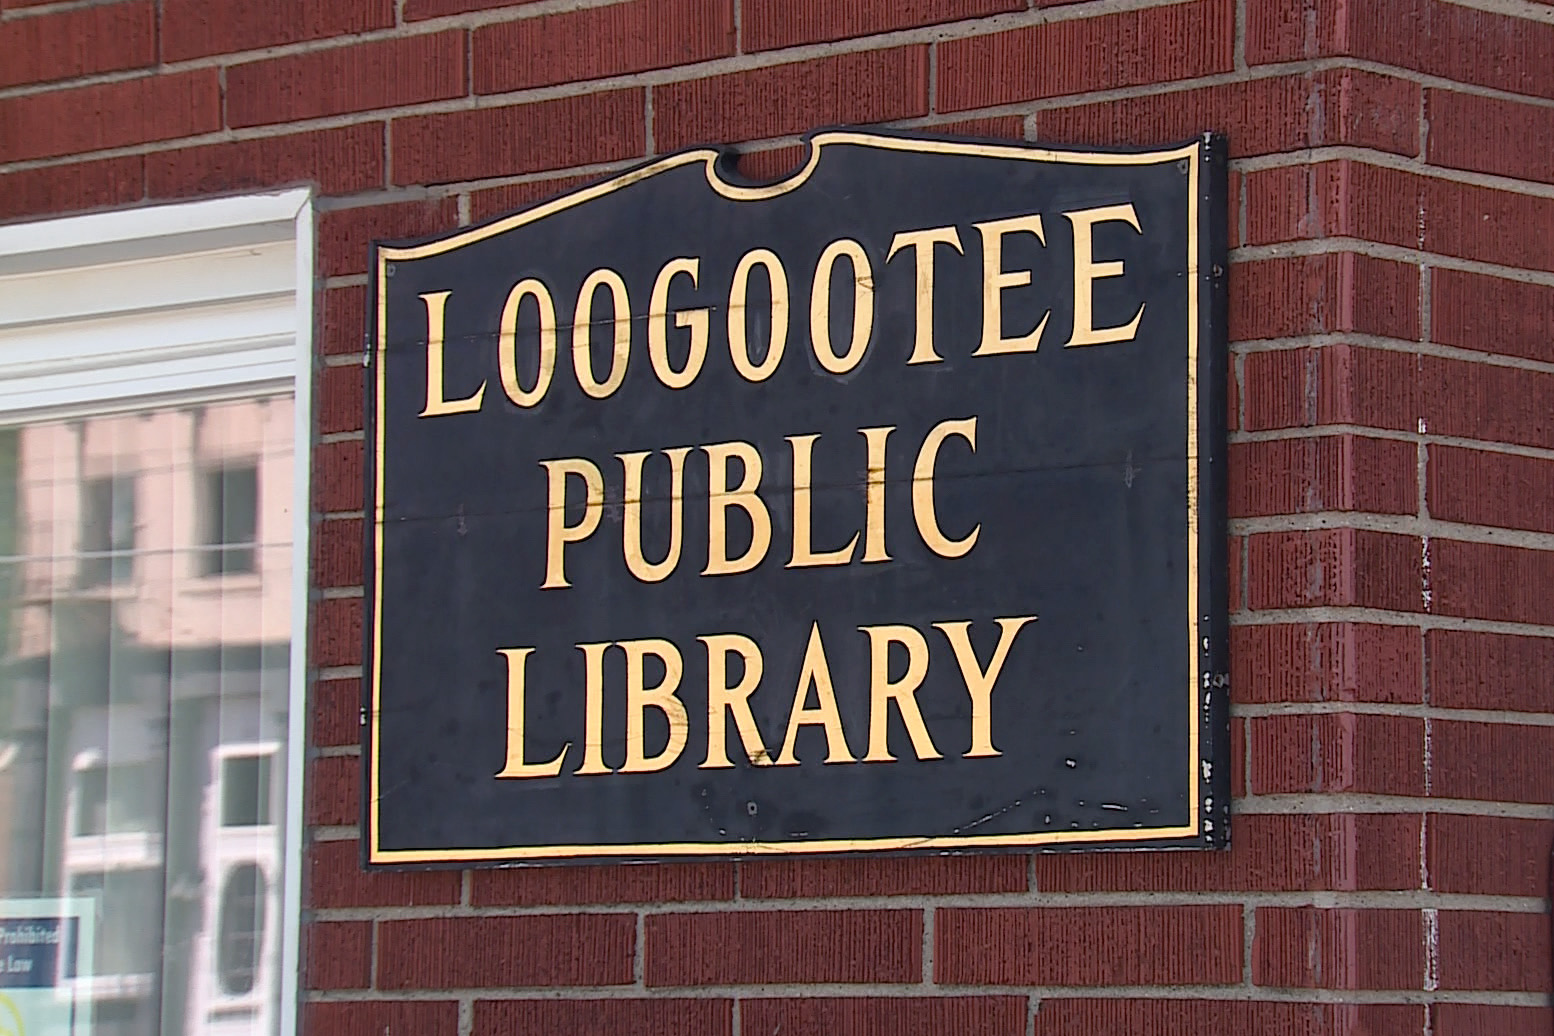 loogootee-public-library2_steve-burns.jpg